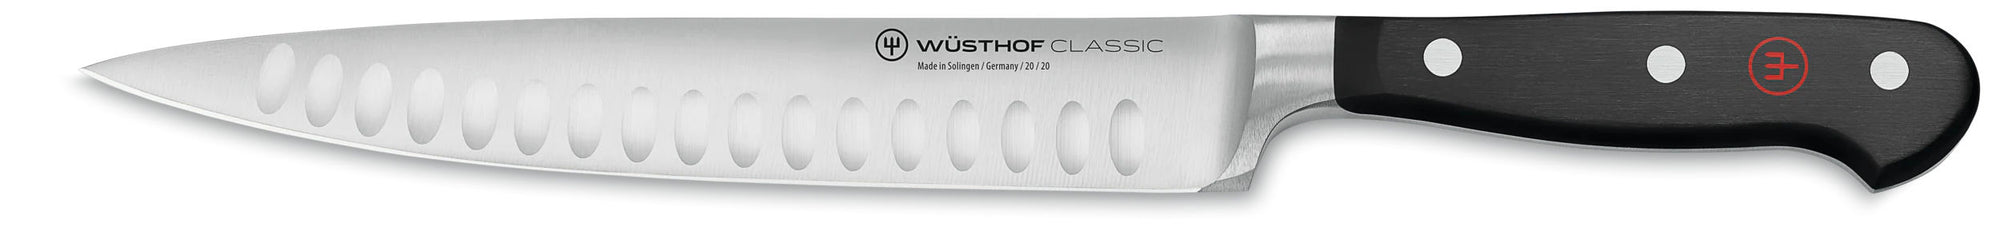 Wusthof Classic Carving Knife, 8-inch (20 cm), Granton Edge - 4524-20